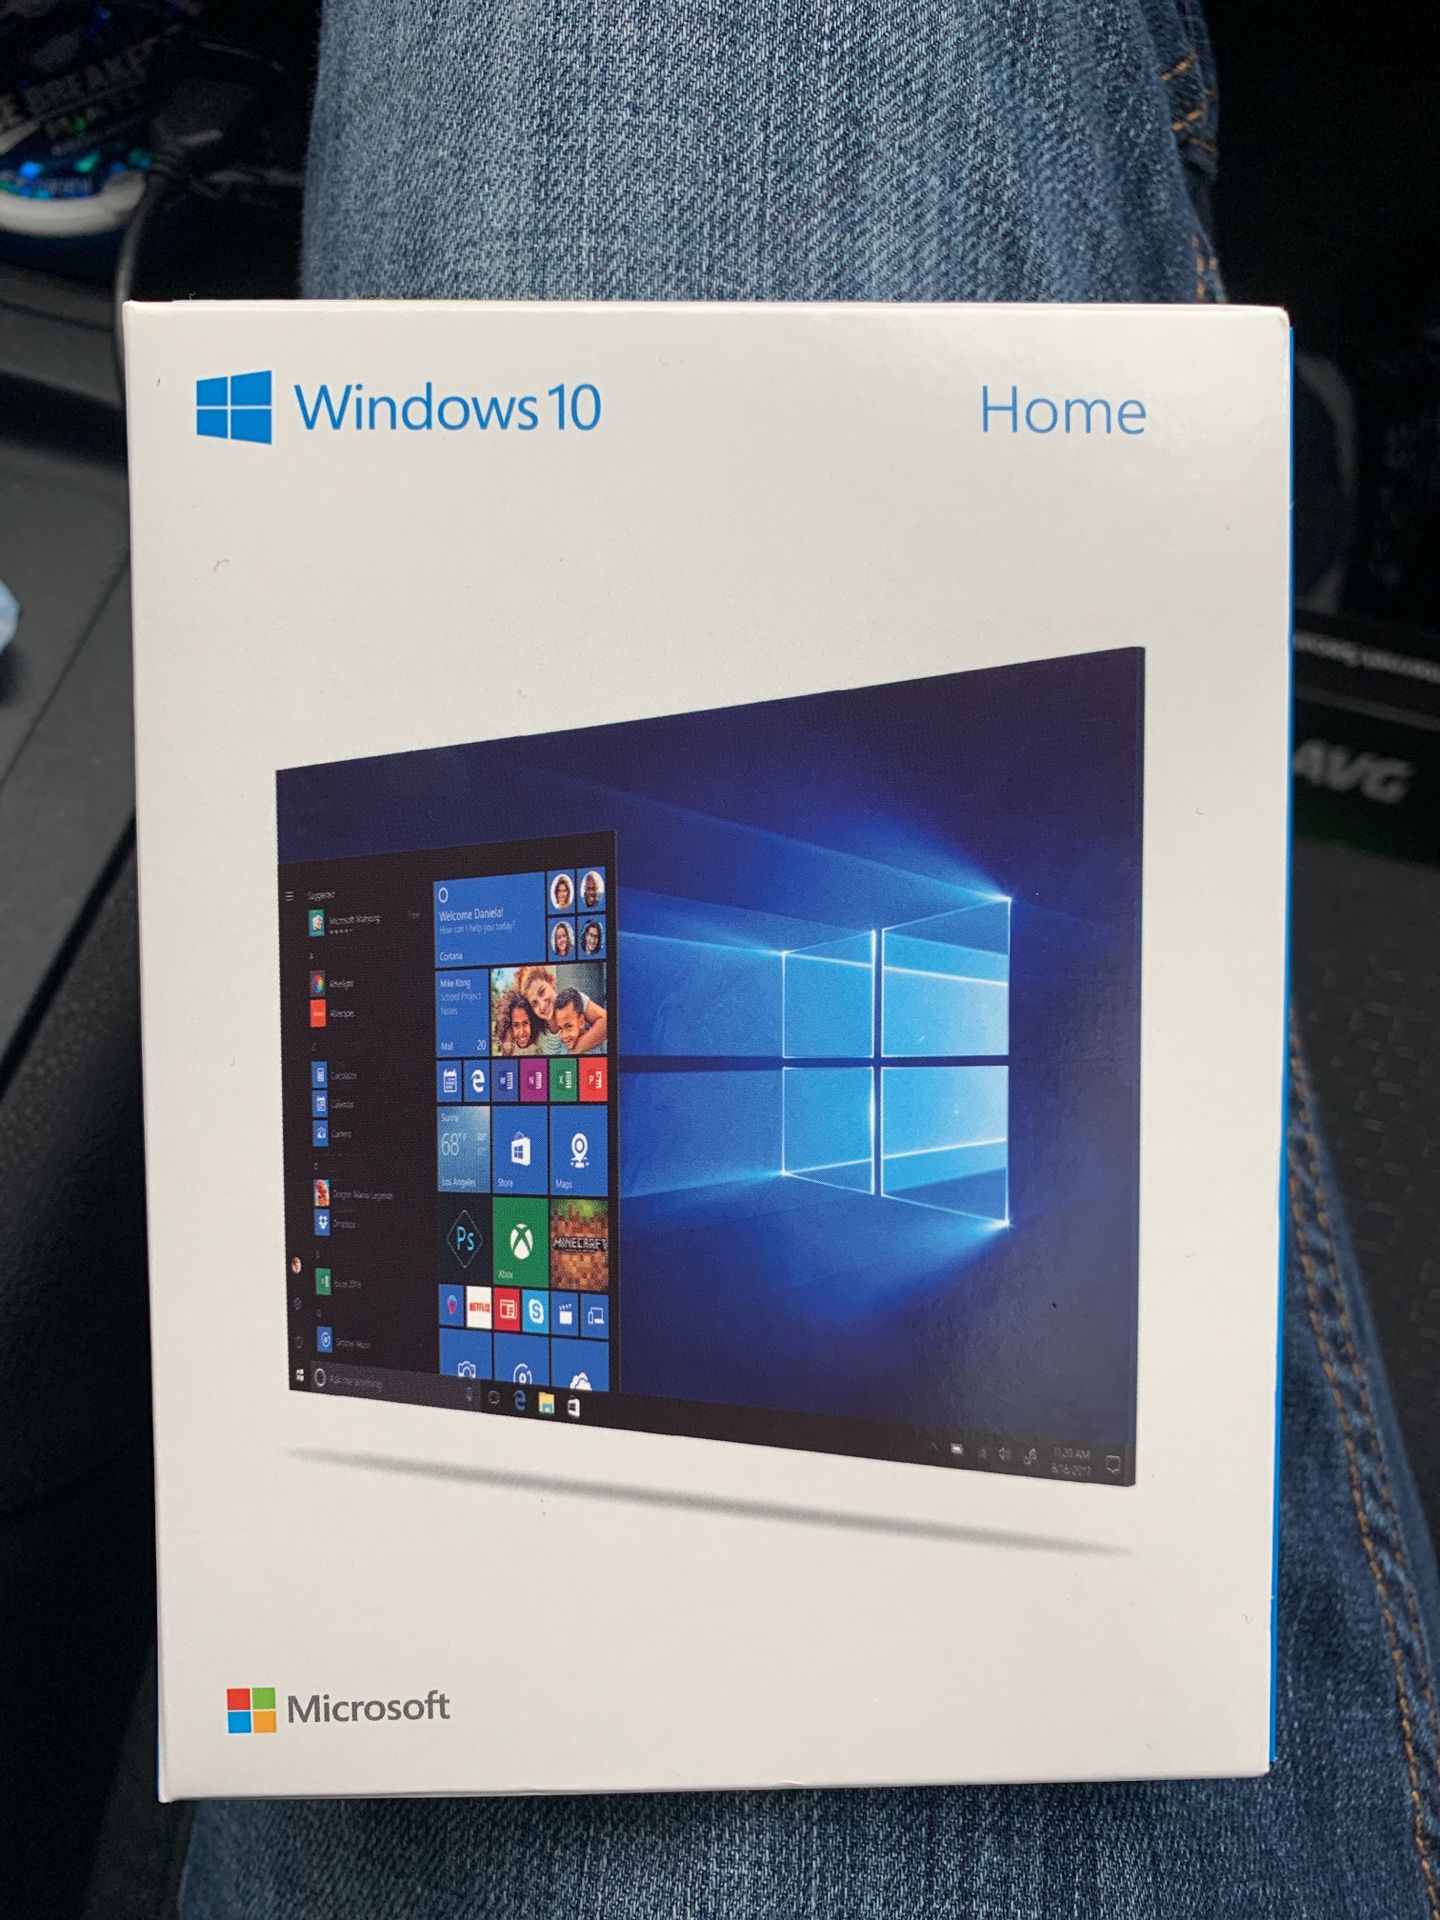 Windows 10 home edition.